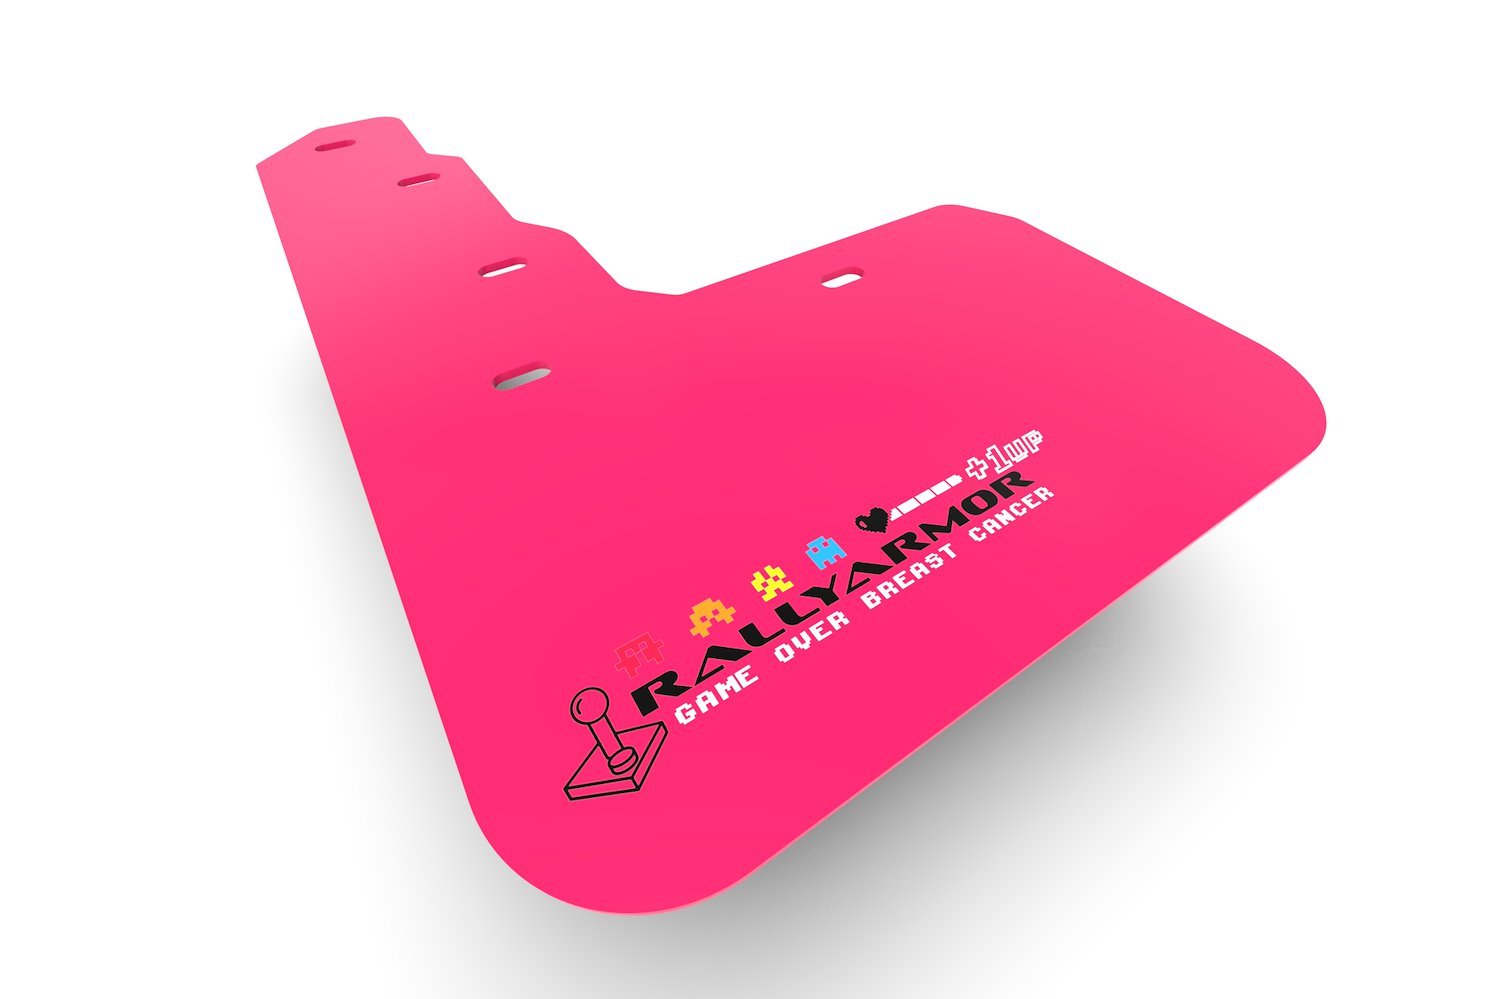 MF92-BCE22-PK/BLK Mud Flap Kit with BCE Logo fits Select Subaru WRX - Pink Mud Flap/Breast Cancer Logo